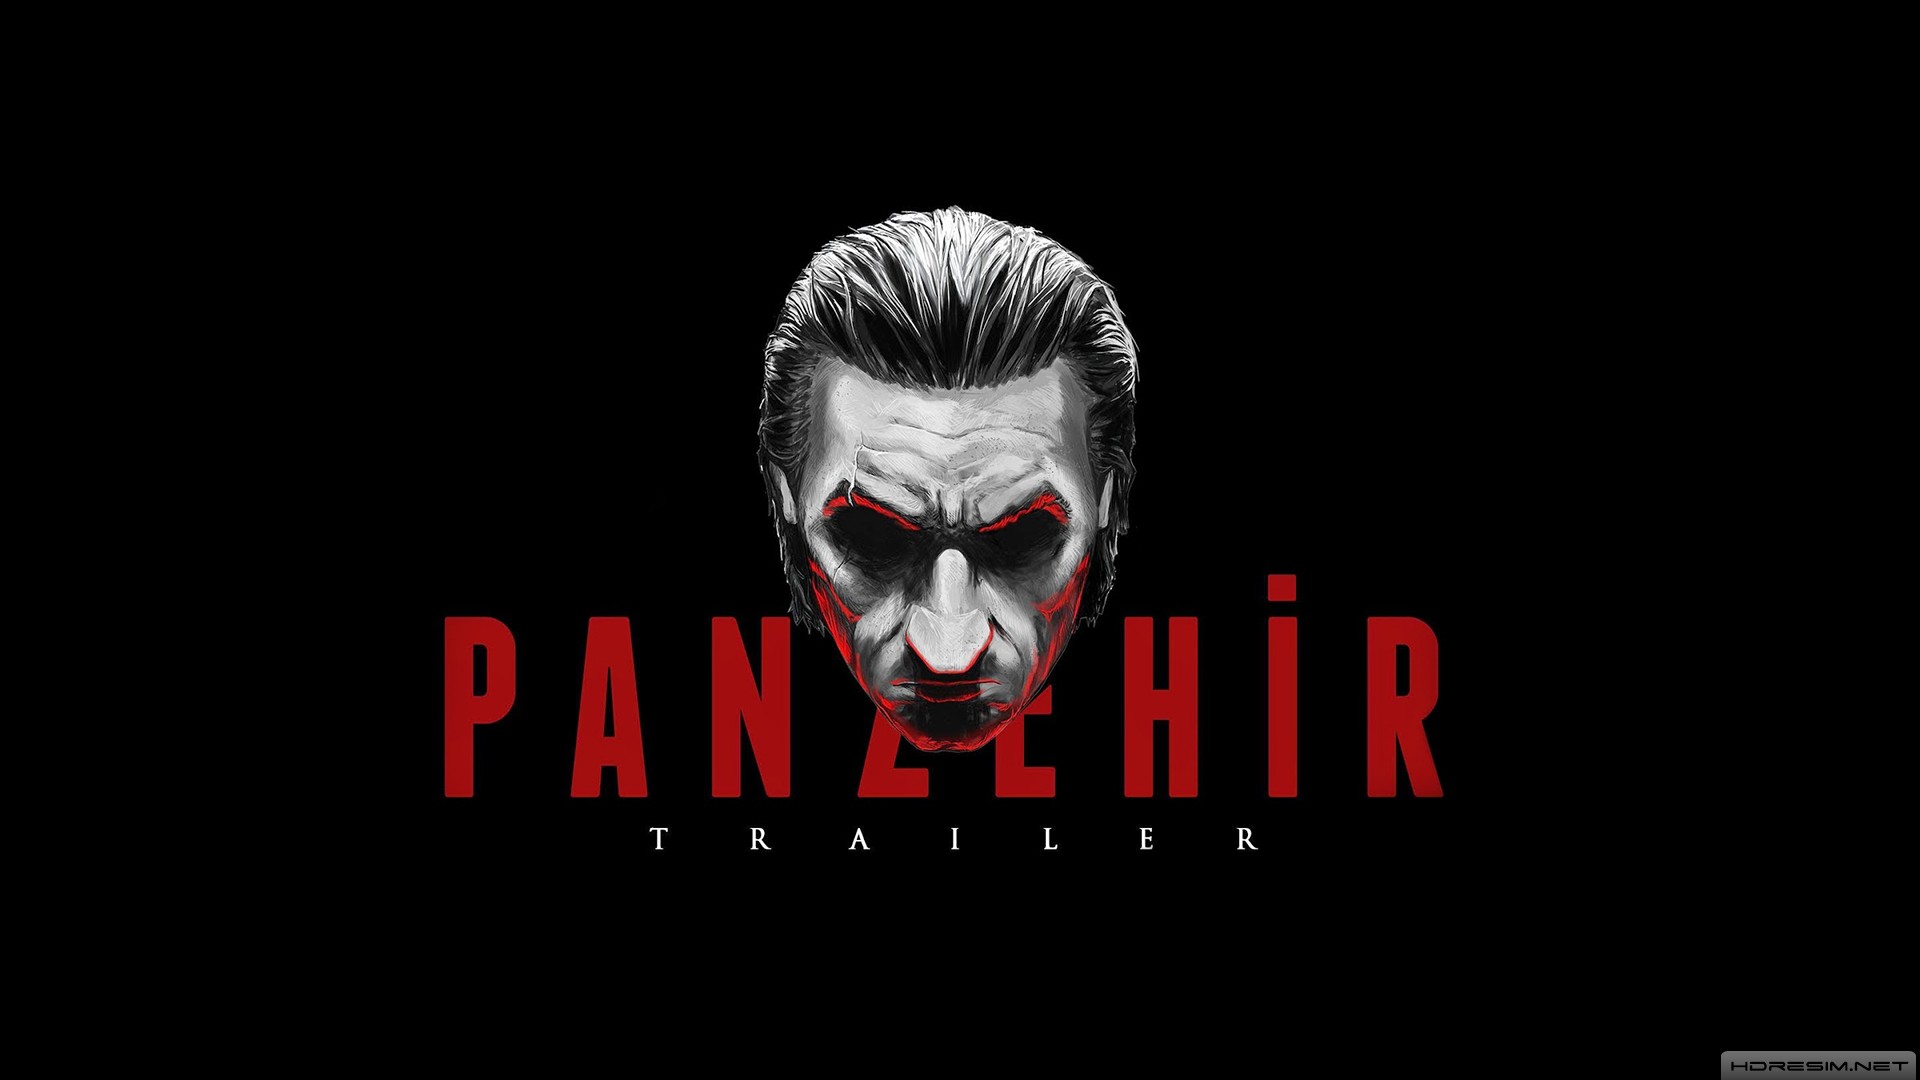 panzehir,film,2014,yerli film